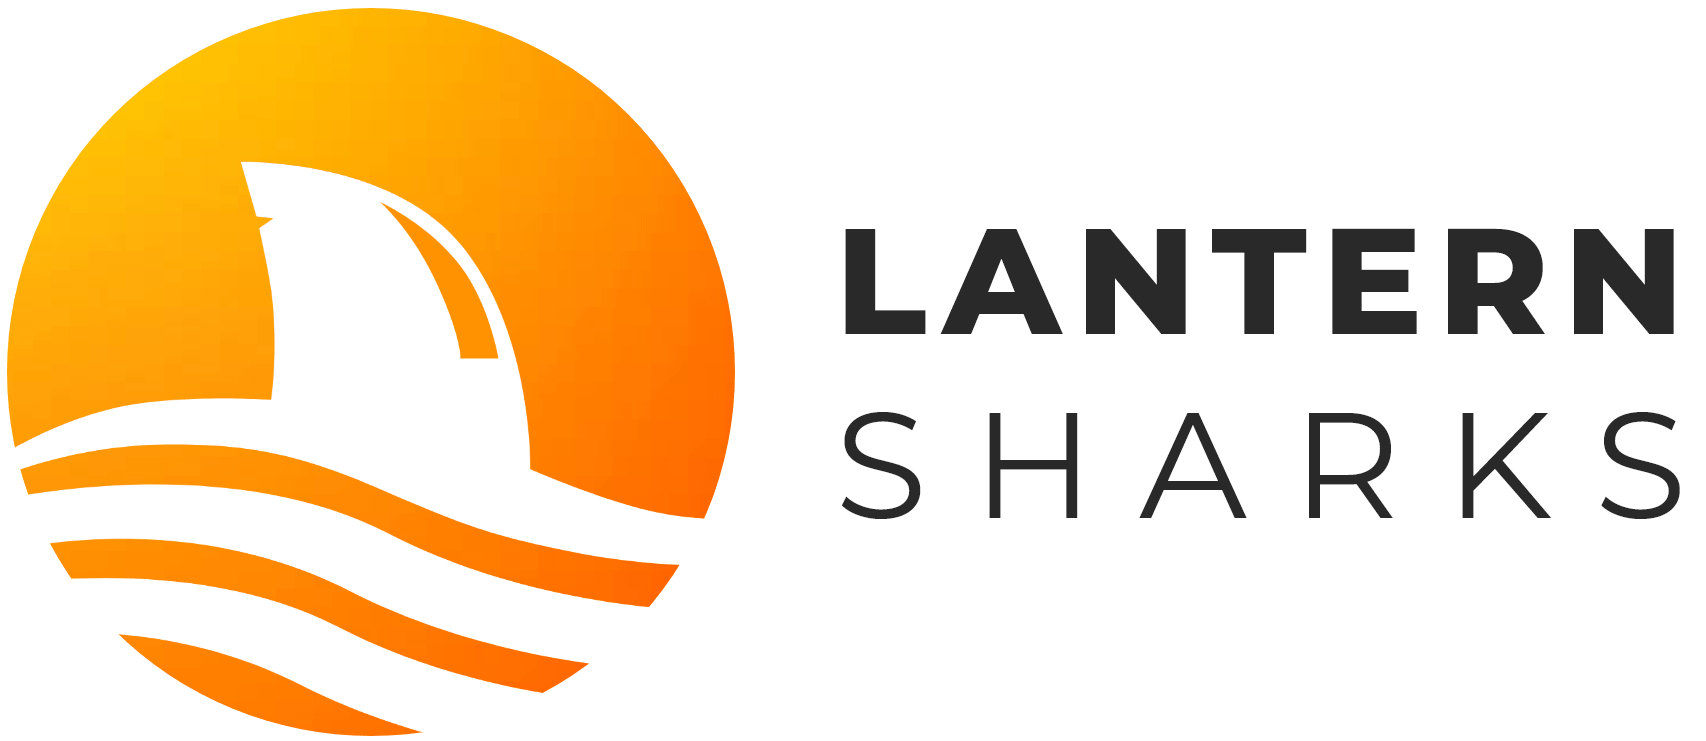 Lantern Sharks logo